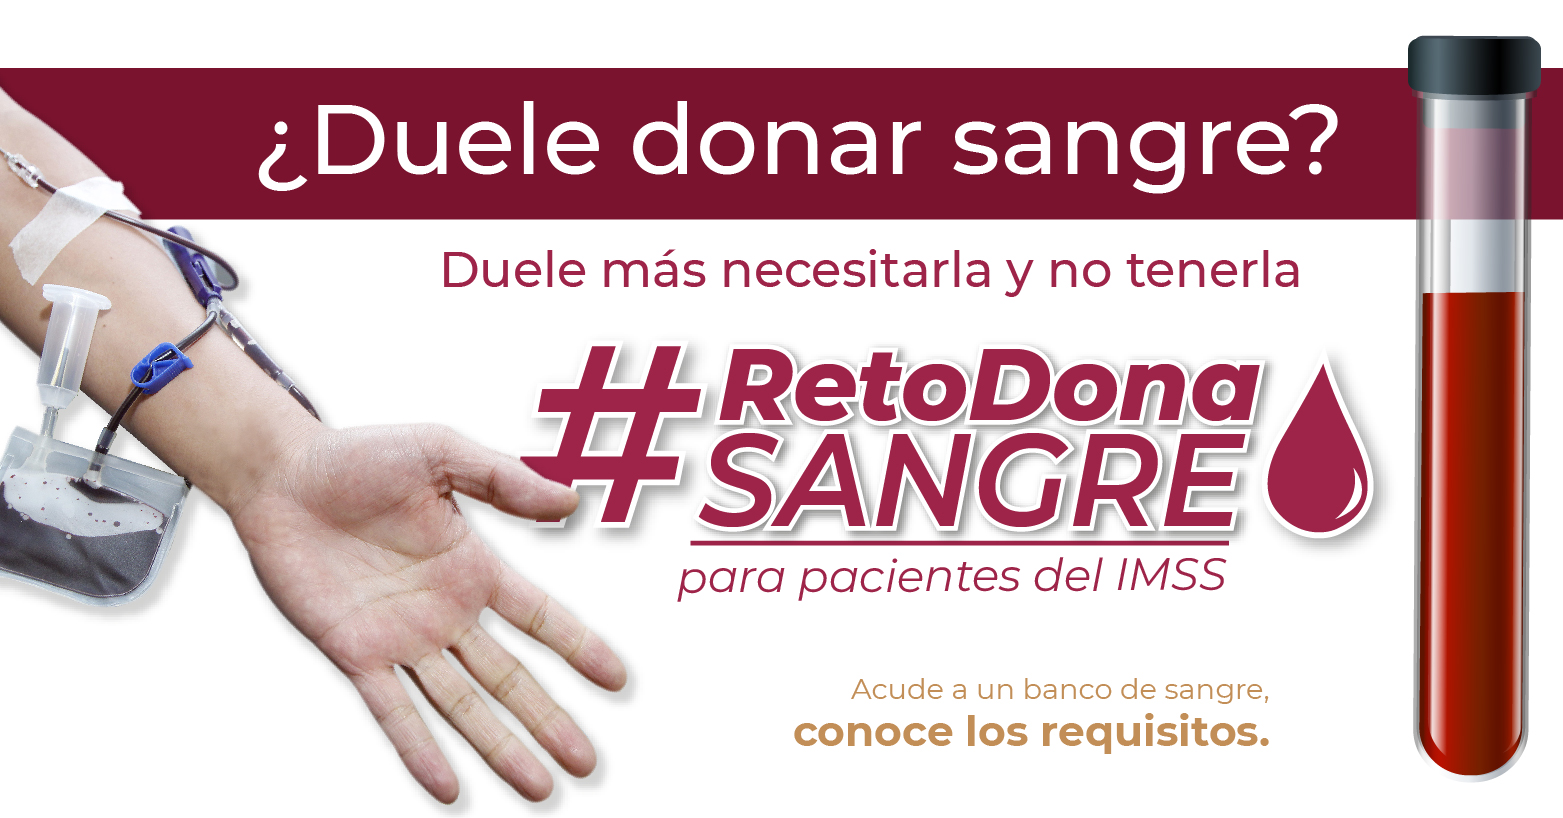 Brazo extendido en proceso de extracción de sangre #RetoDonaSangre.